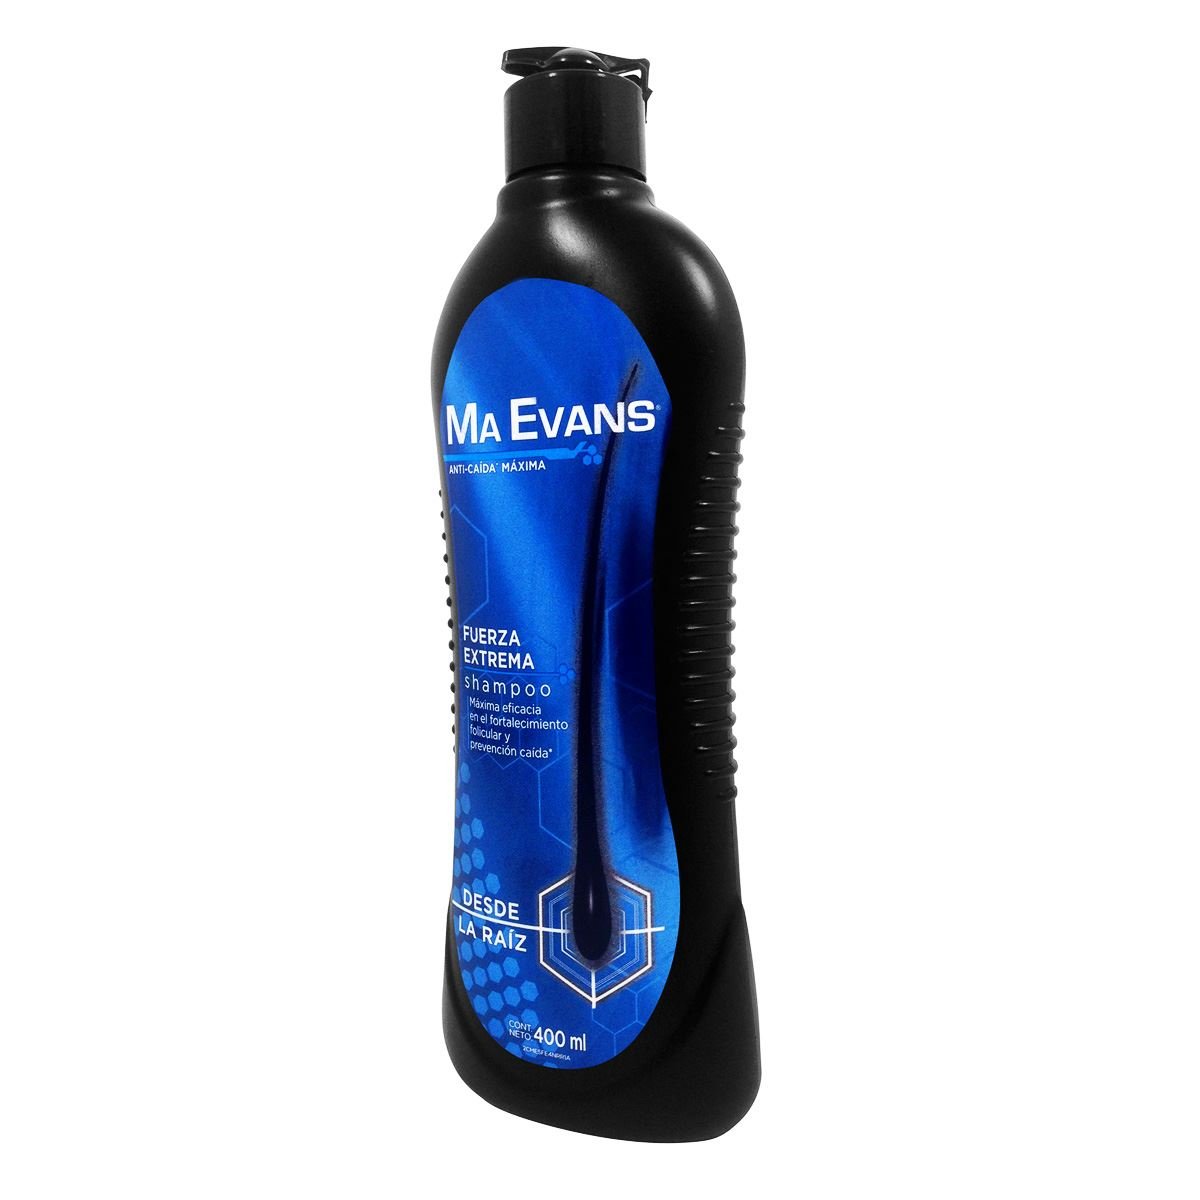 Ma Evans shampoo fuerza extrema 400 ml